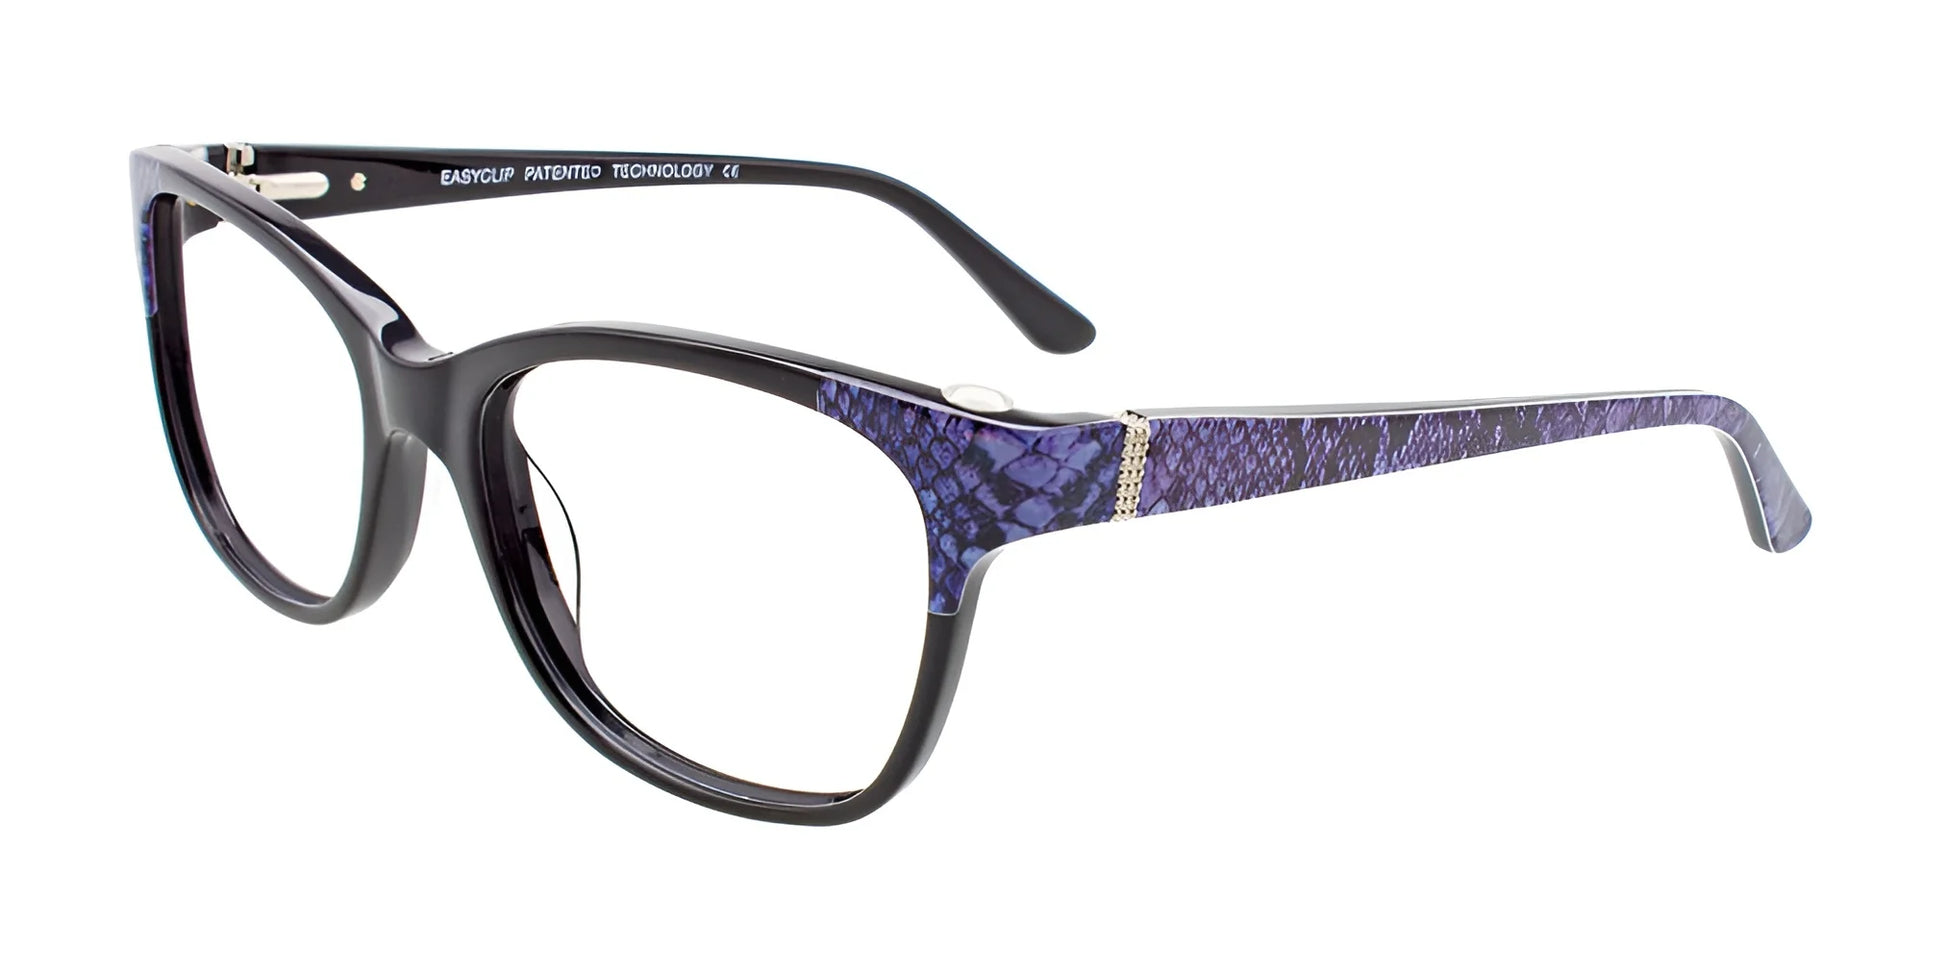 EasyClip EC464 Eyeglasses with Clip-on Sunglasses Black & Lavender Snake Pattern